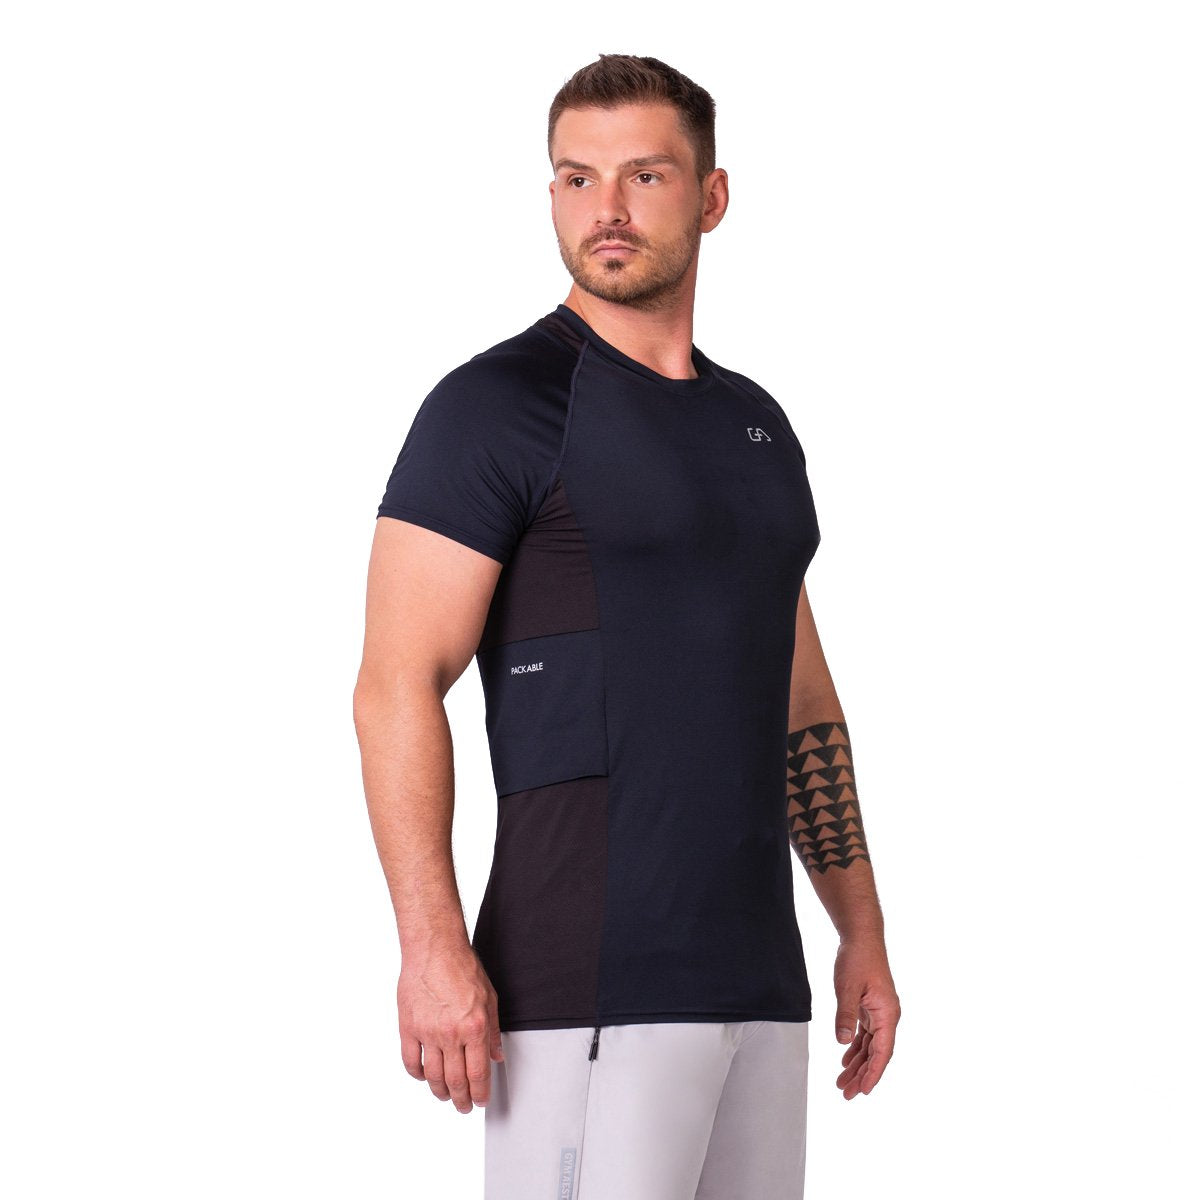 Essential Packable Loose-Fit T-Shirt for Men